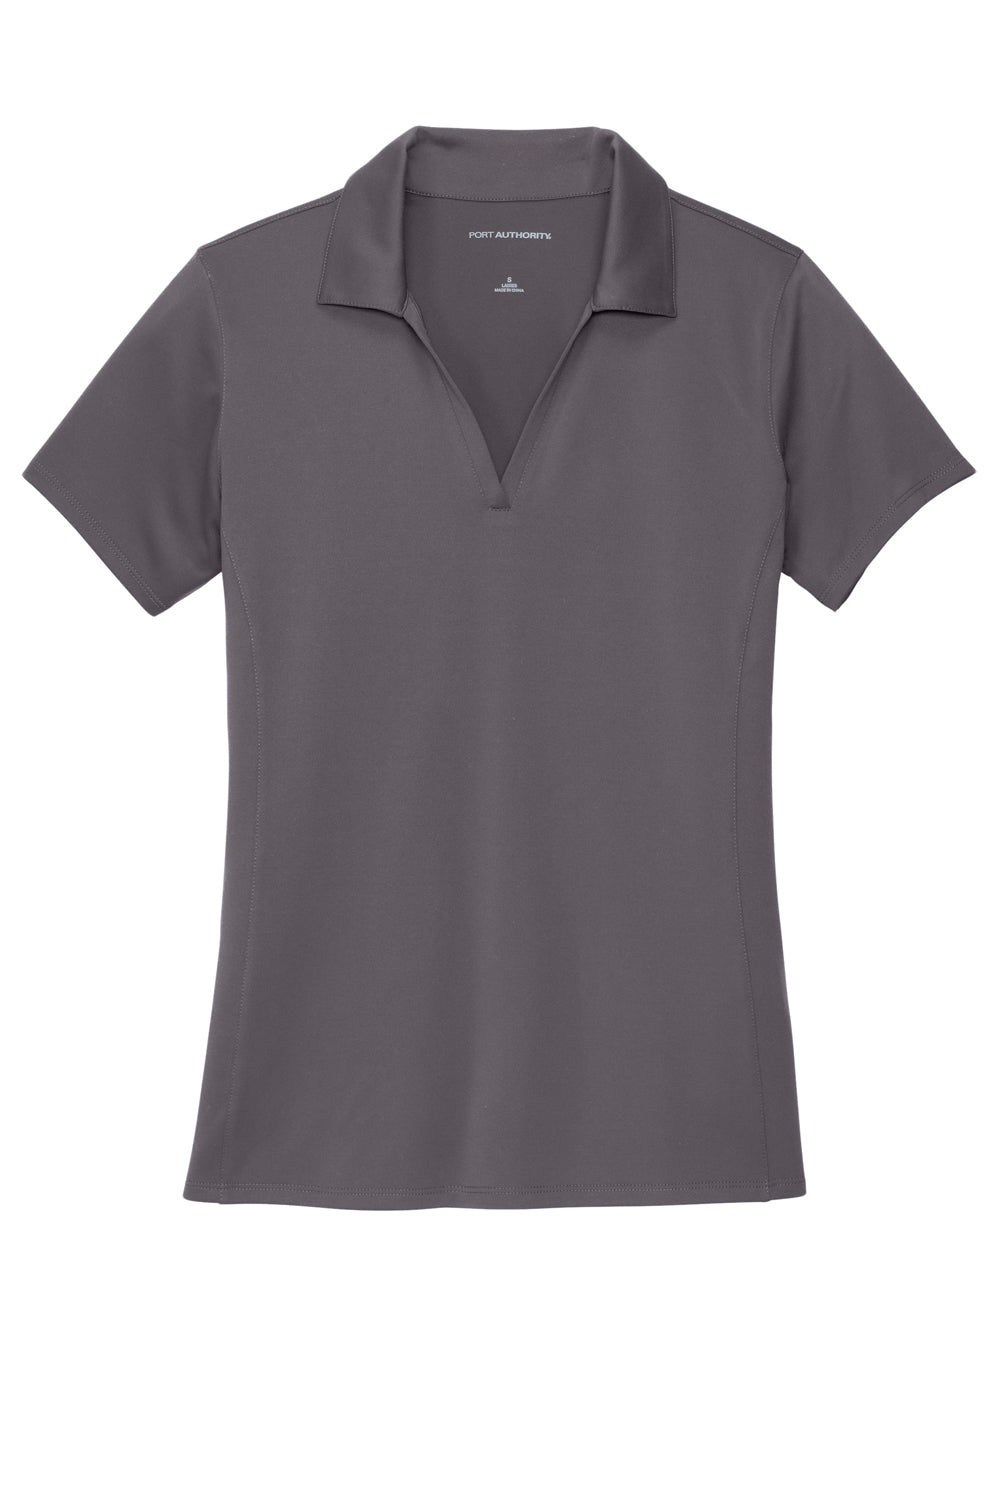 Port Authority LK398 Performance Staff Short Sleeve Polo Shirt Graphite Grey Flat Front